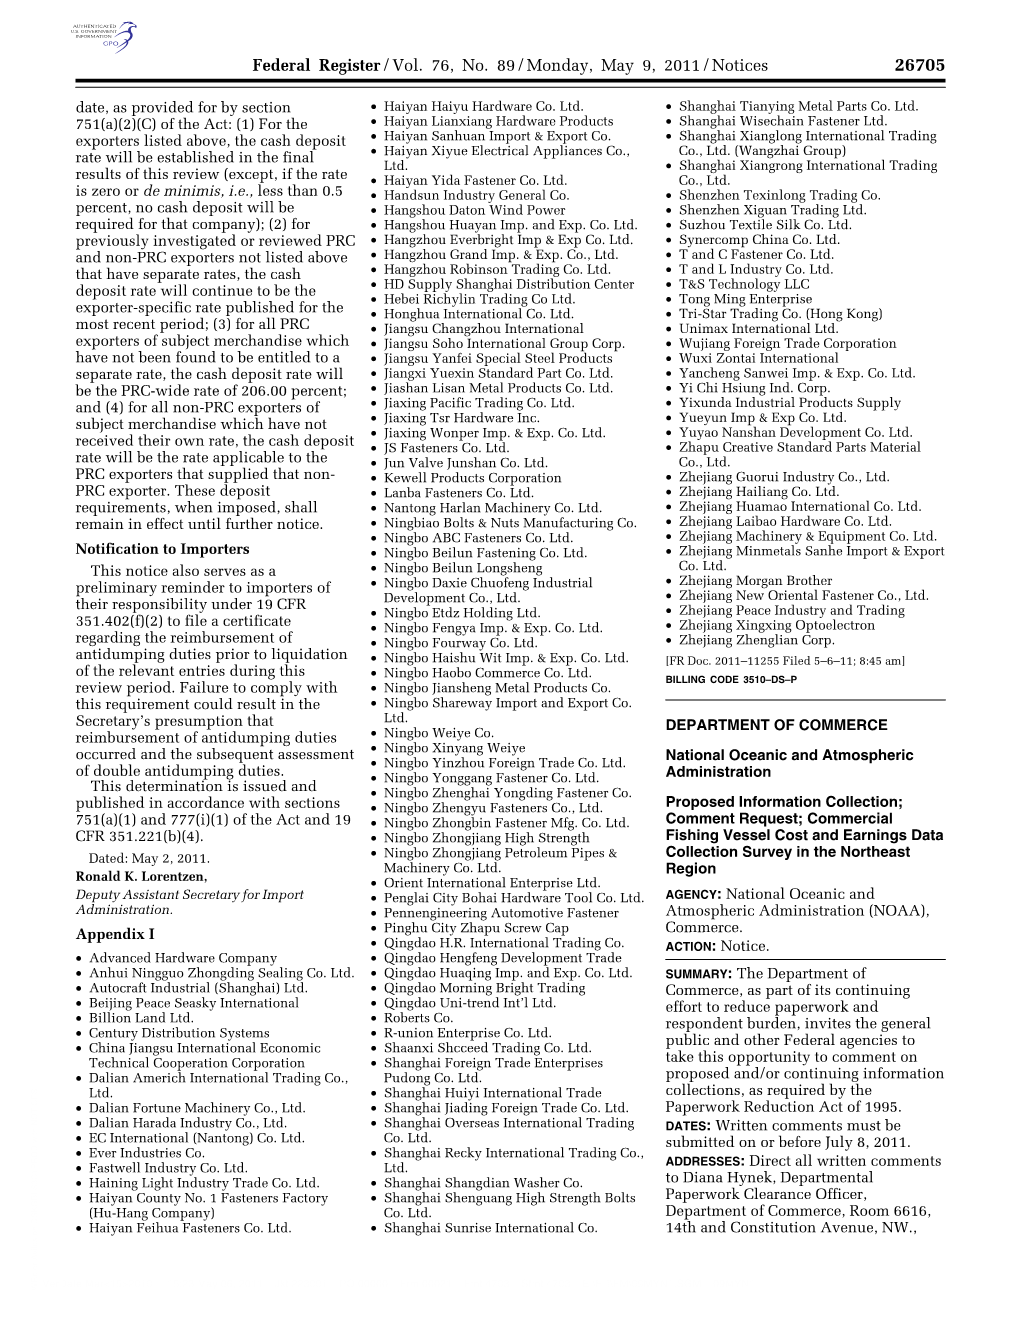 Federal Register/Vol. 76, No. 89/Monday, May 9, 2011/Notices